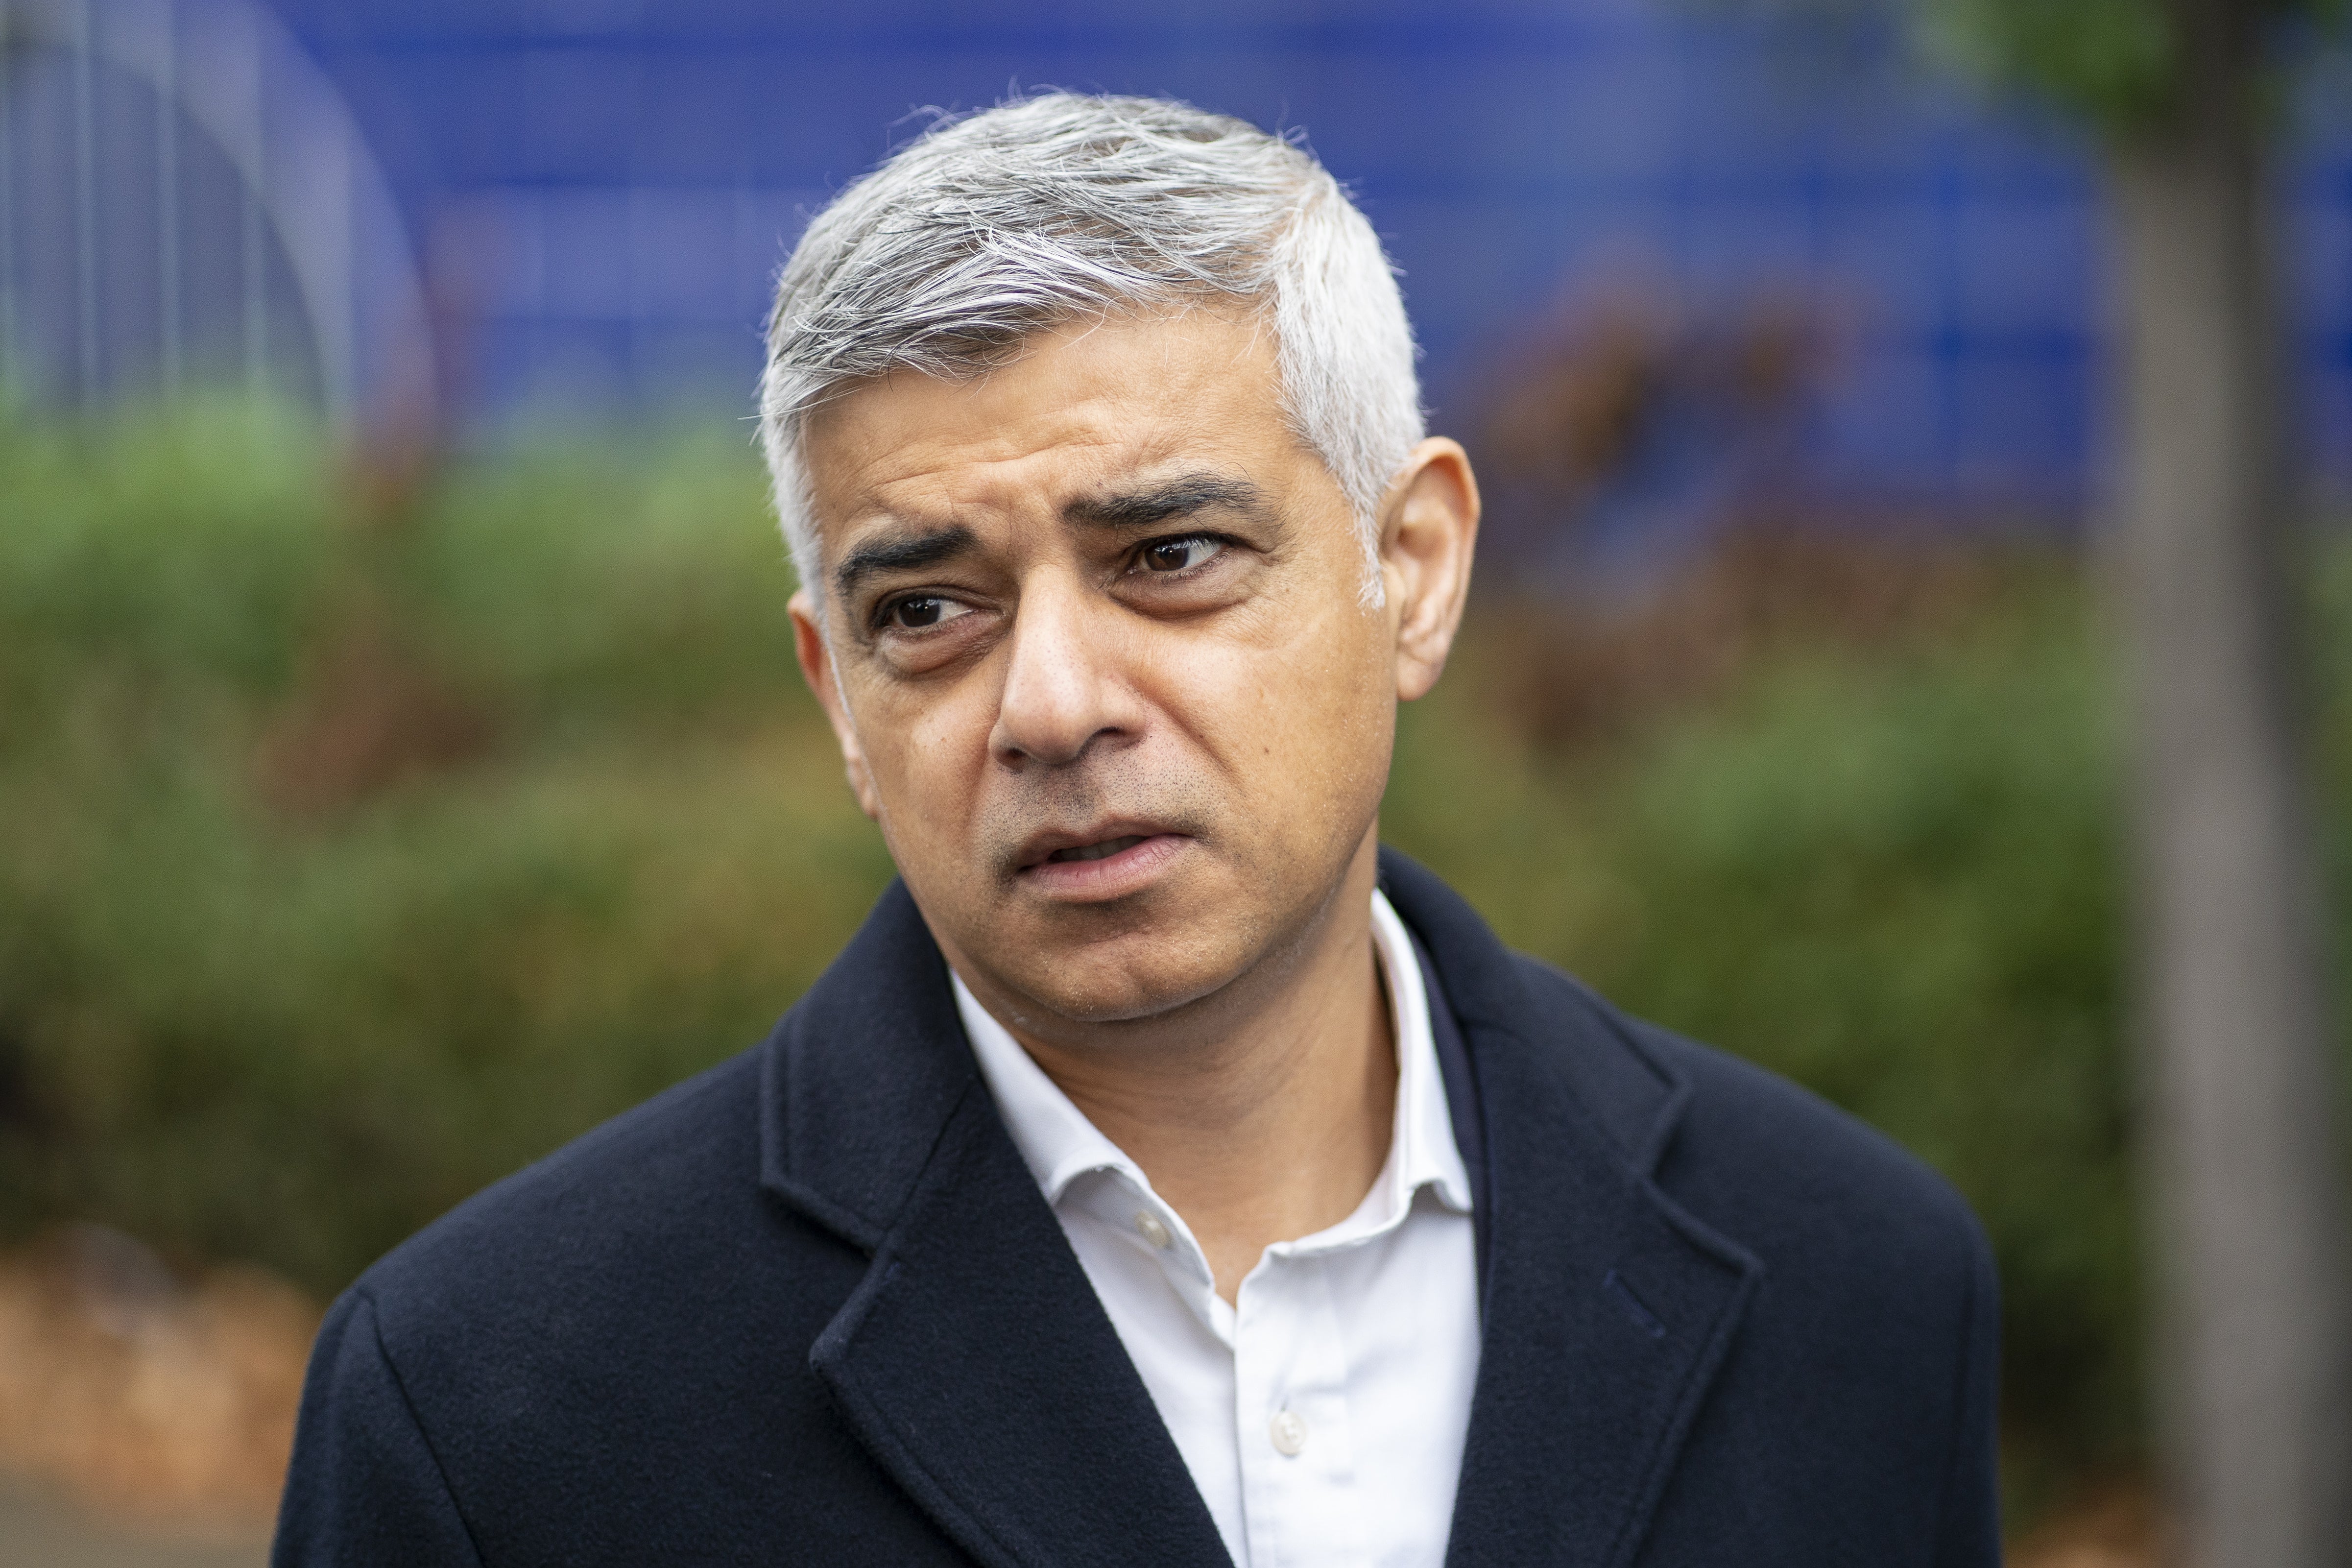 Mayor of London Sadiq Khan praised NHS staff (PA)